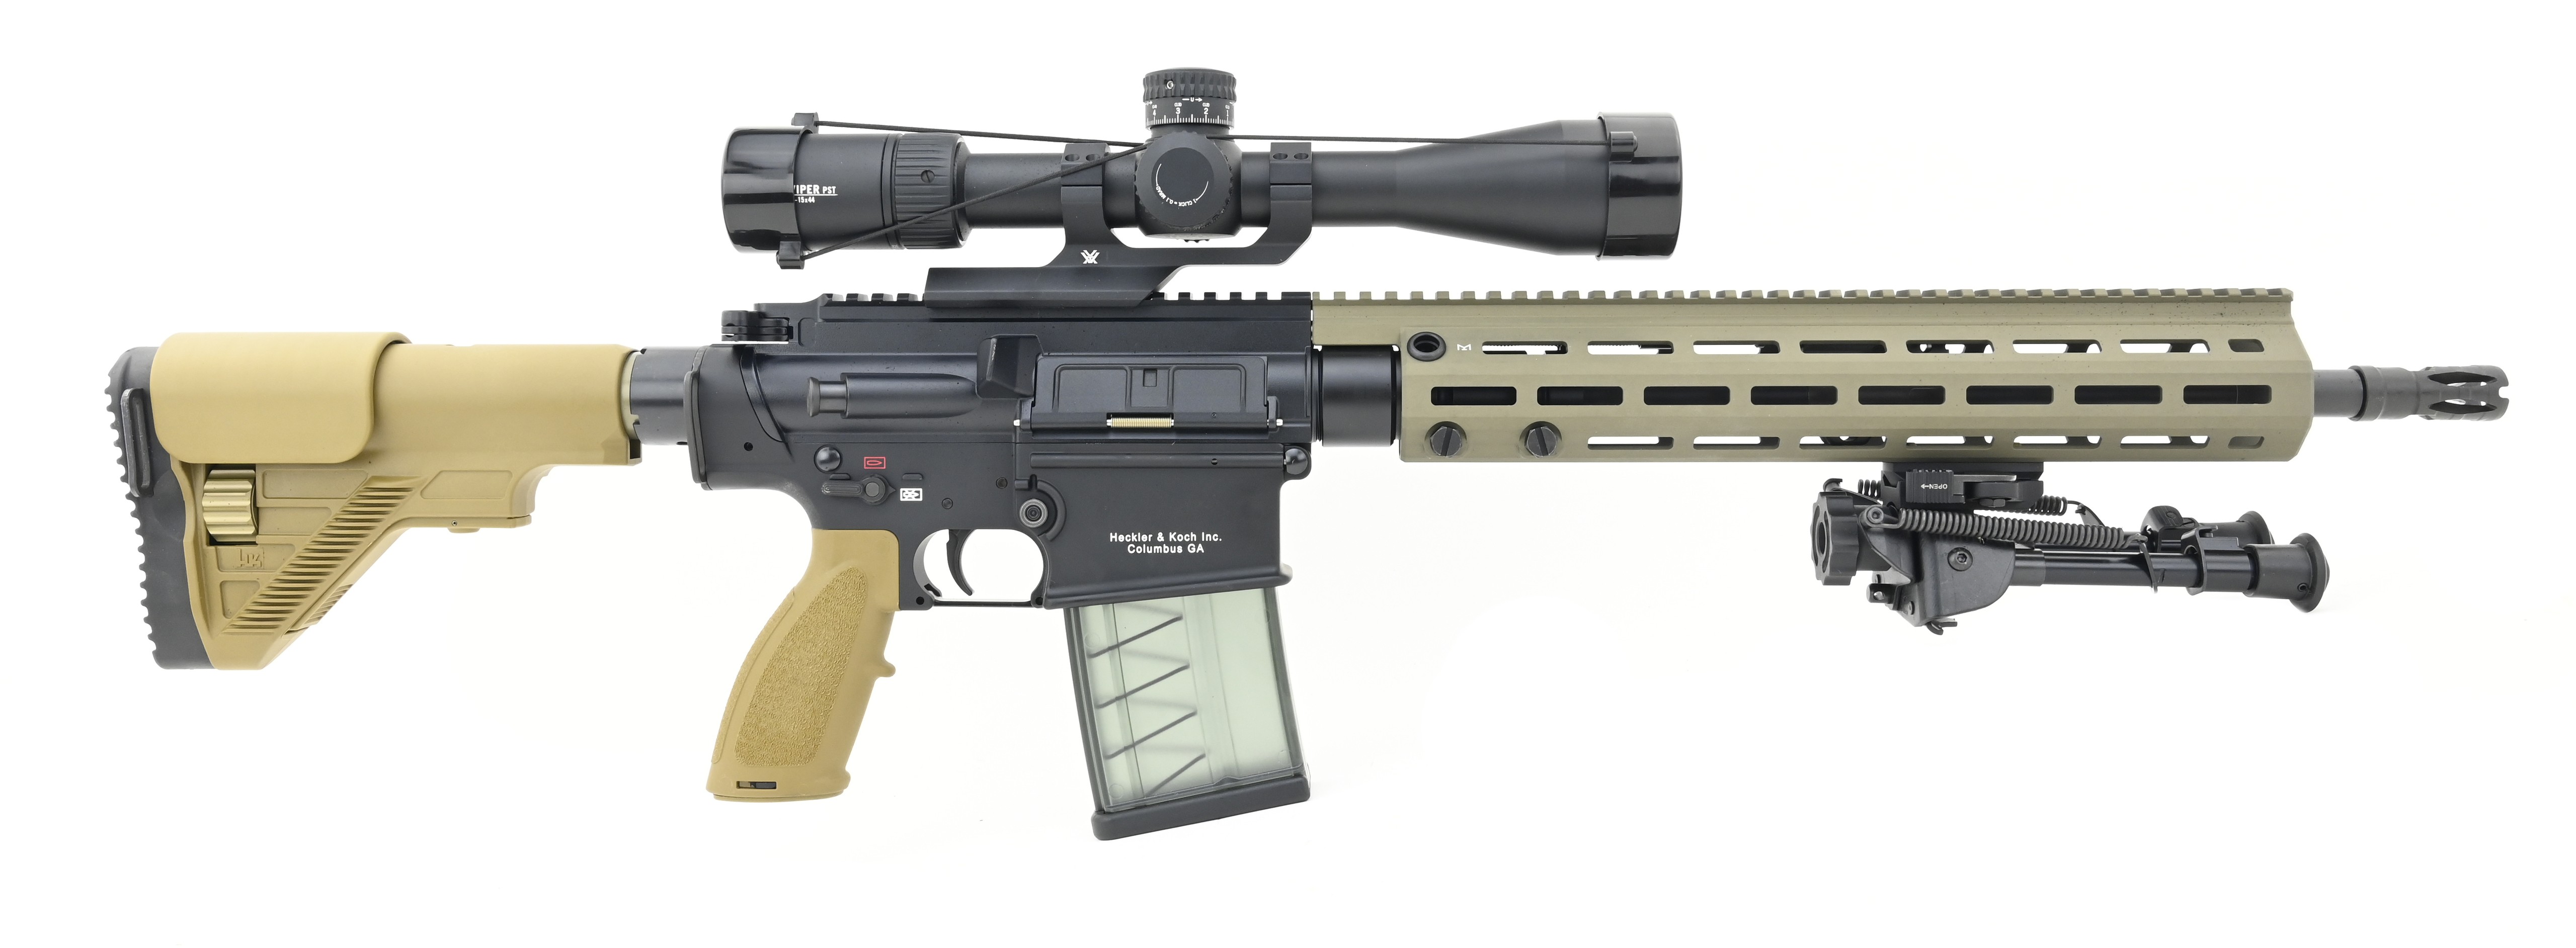 HK MR762A1 7.62x51mm caliber rifle for sale.